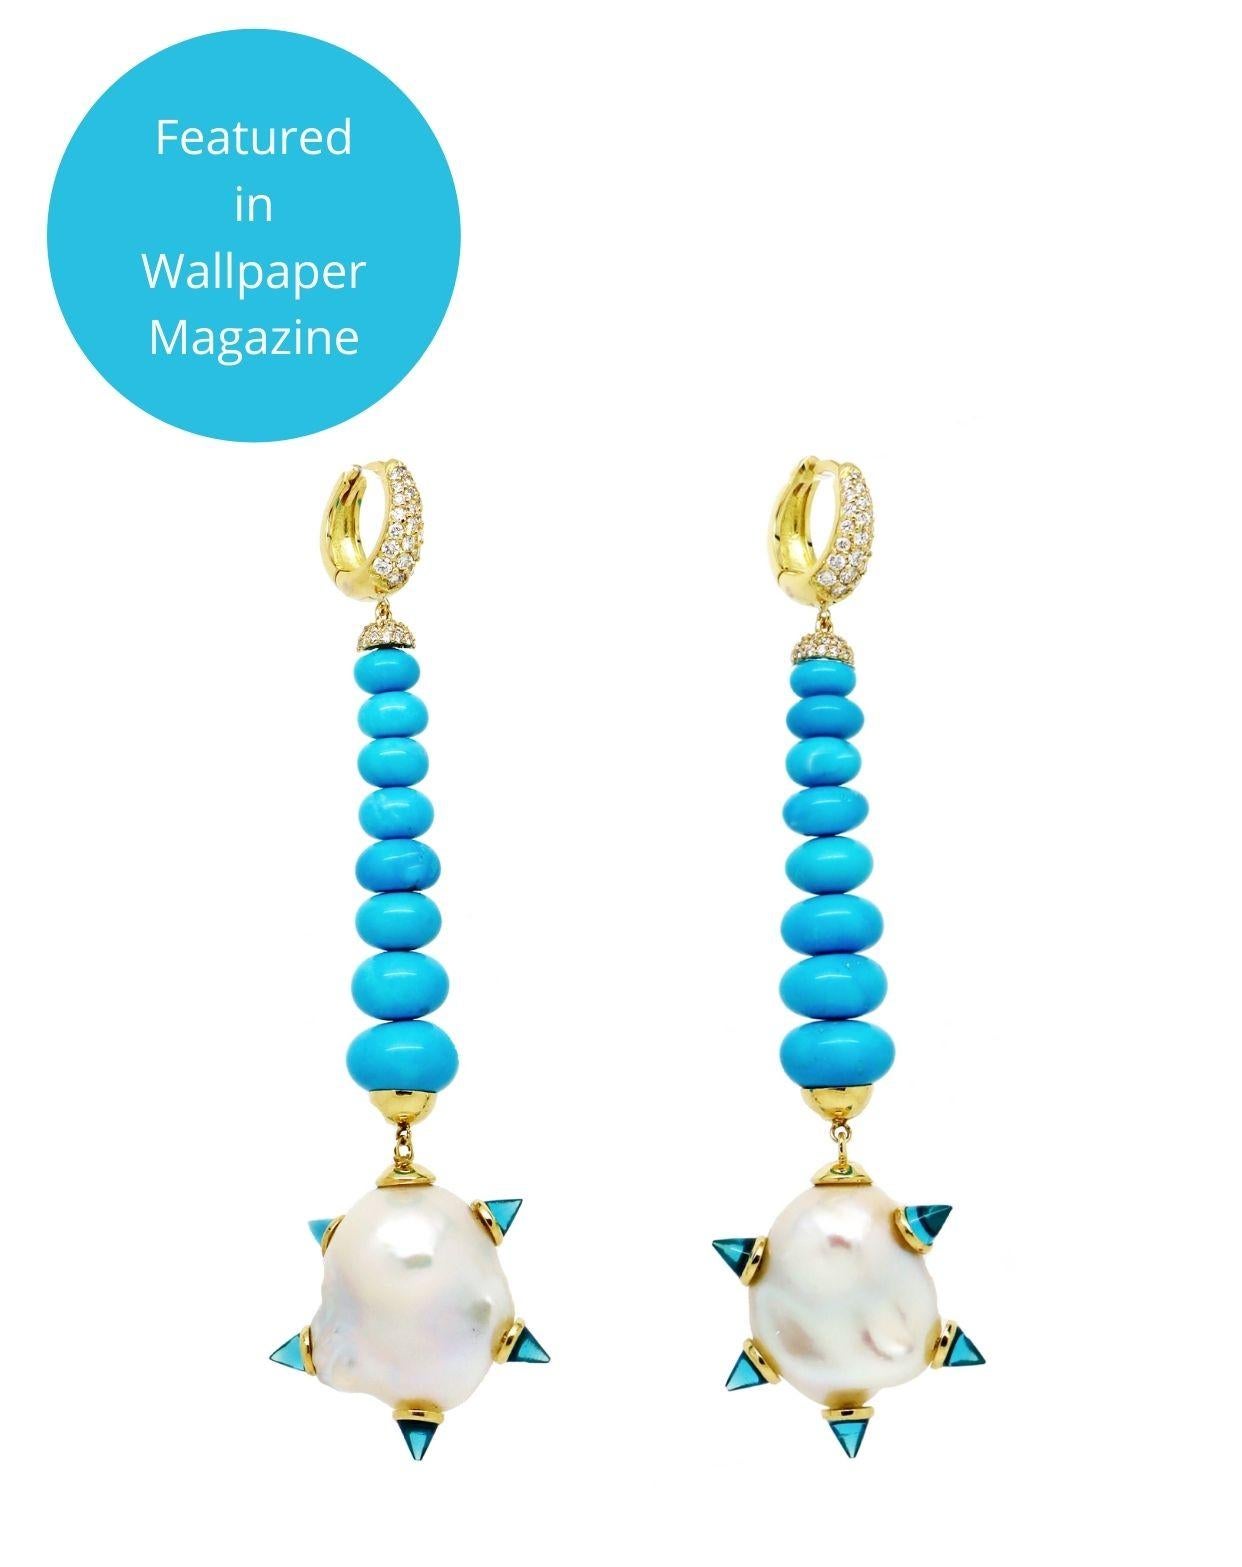 18k gold earrings turquoise -china -b2b -forum -blog -wikipedia -.cn -.gov -alibaba